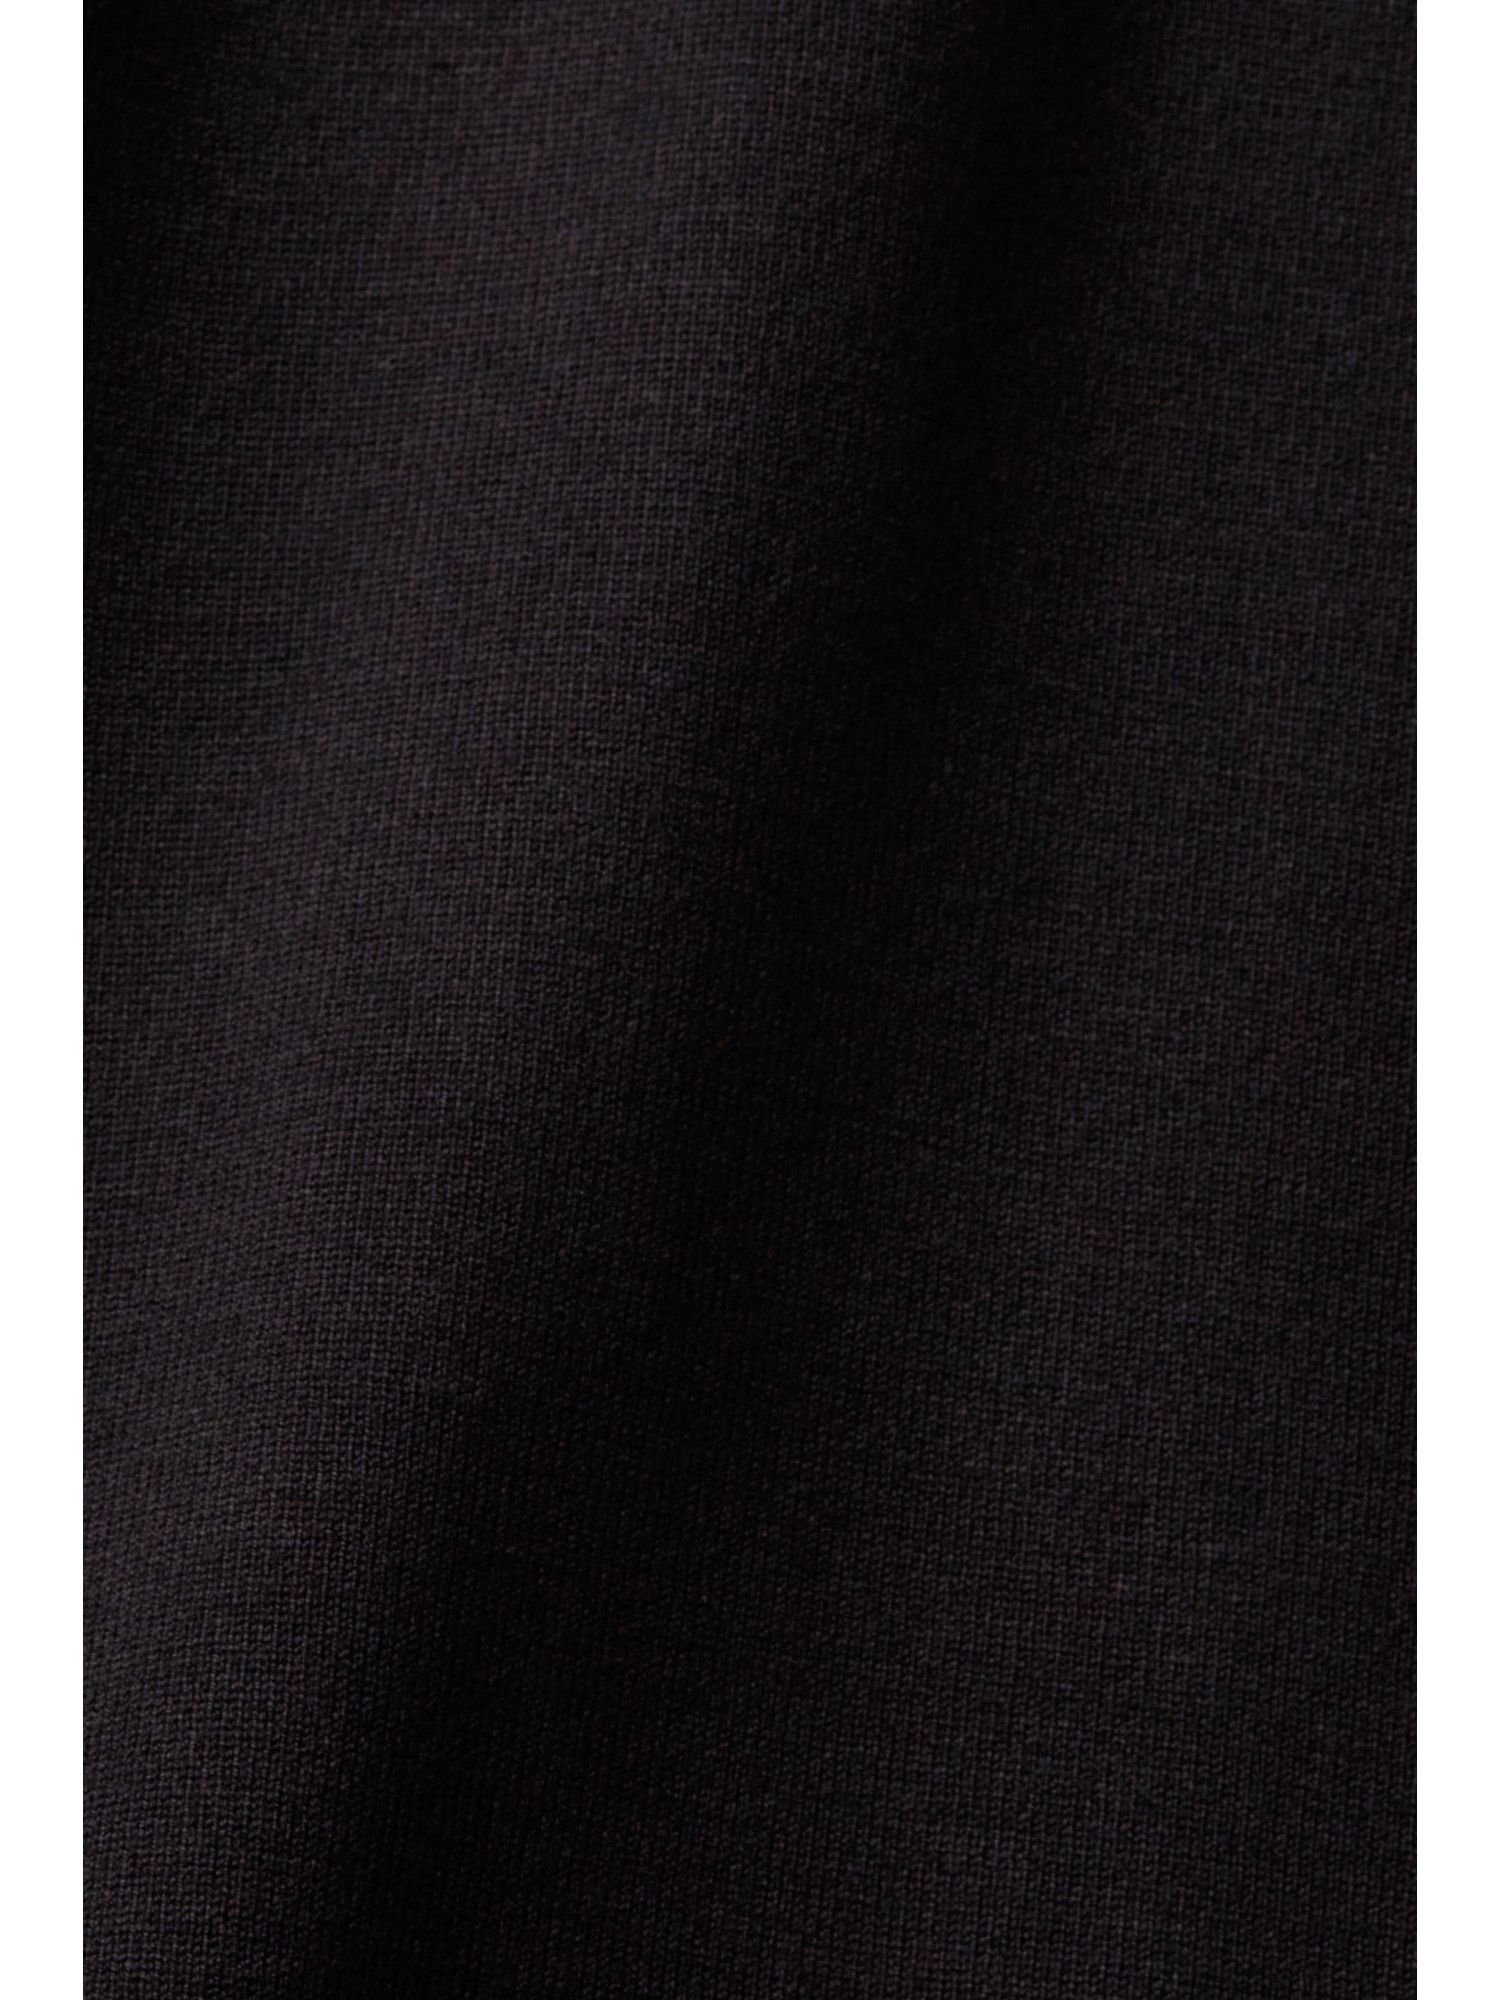 Esprit Strick Collection aus Minikleid Minikleid BLACK